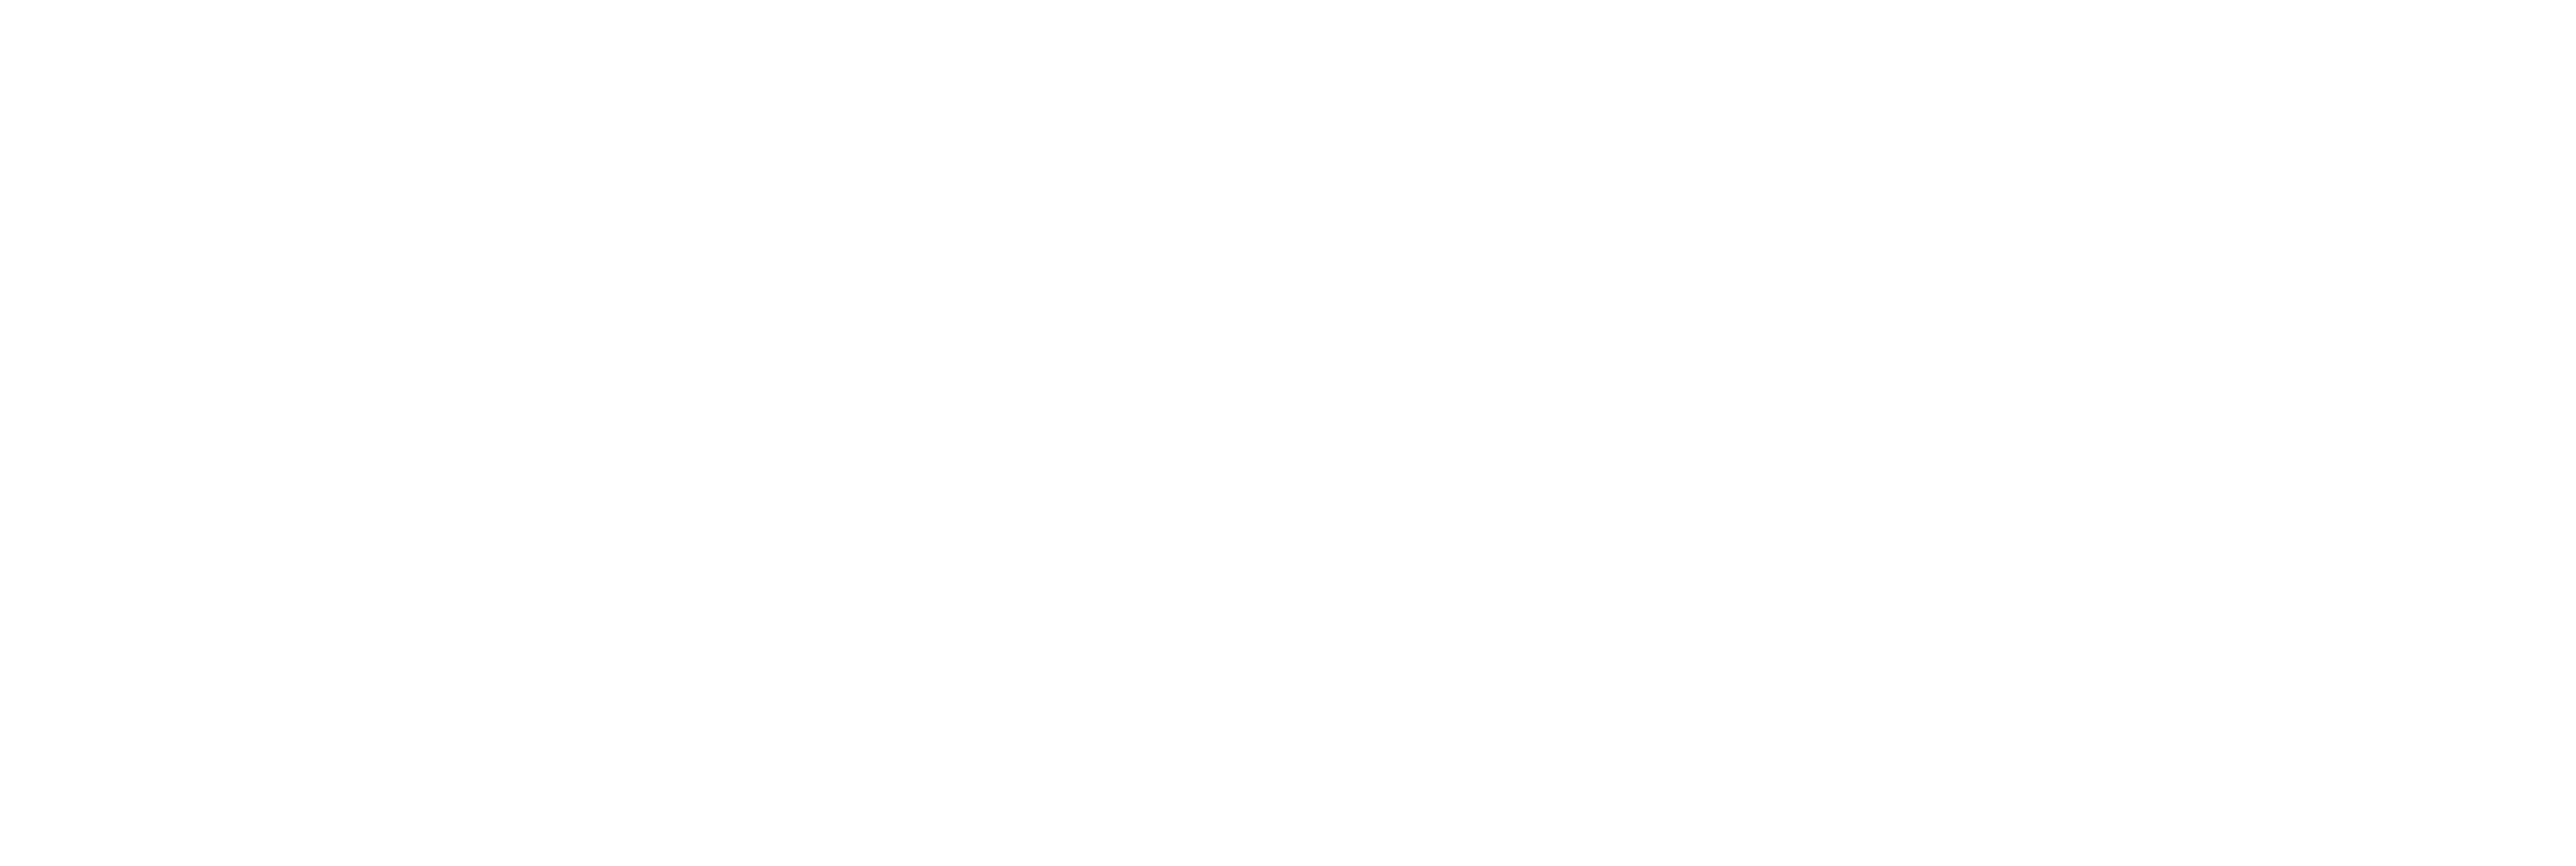 James Baker & Associates| International Tax Consultants